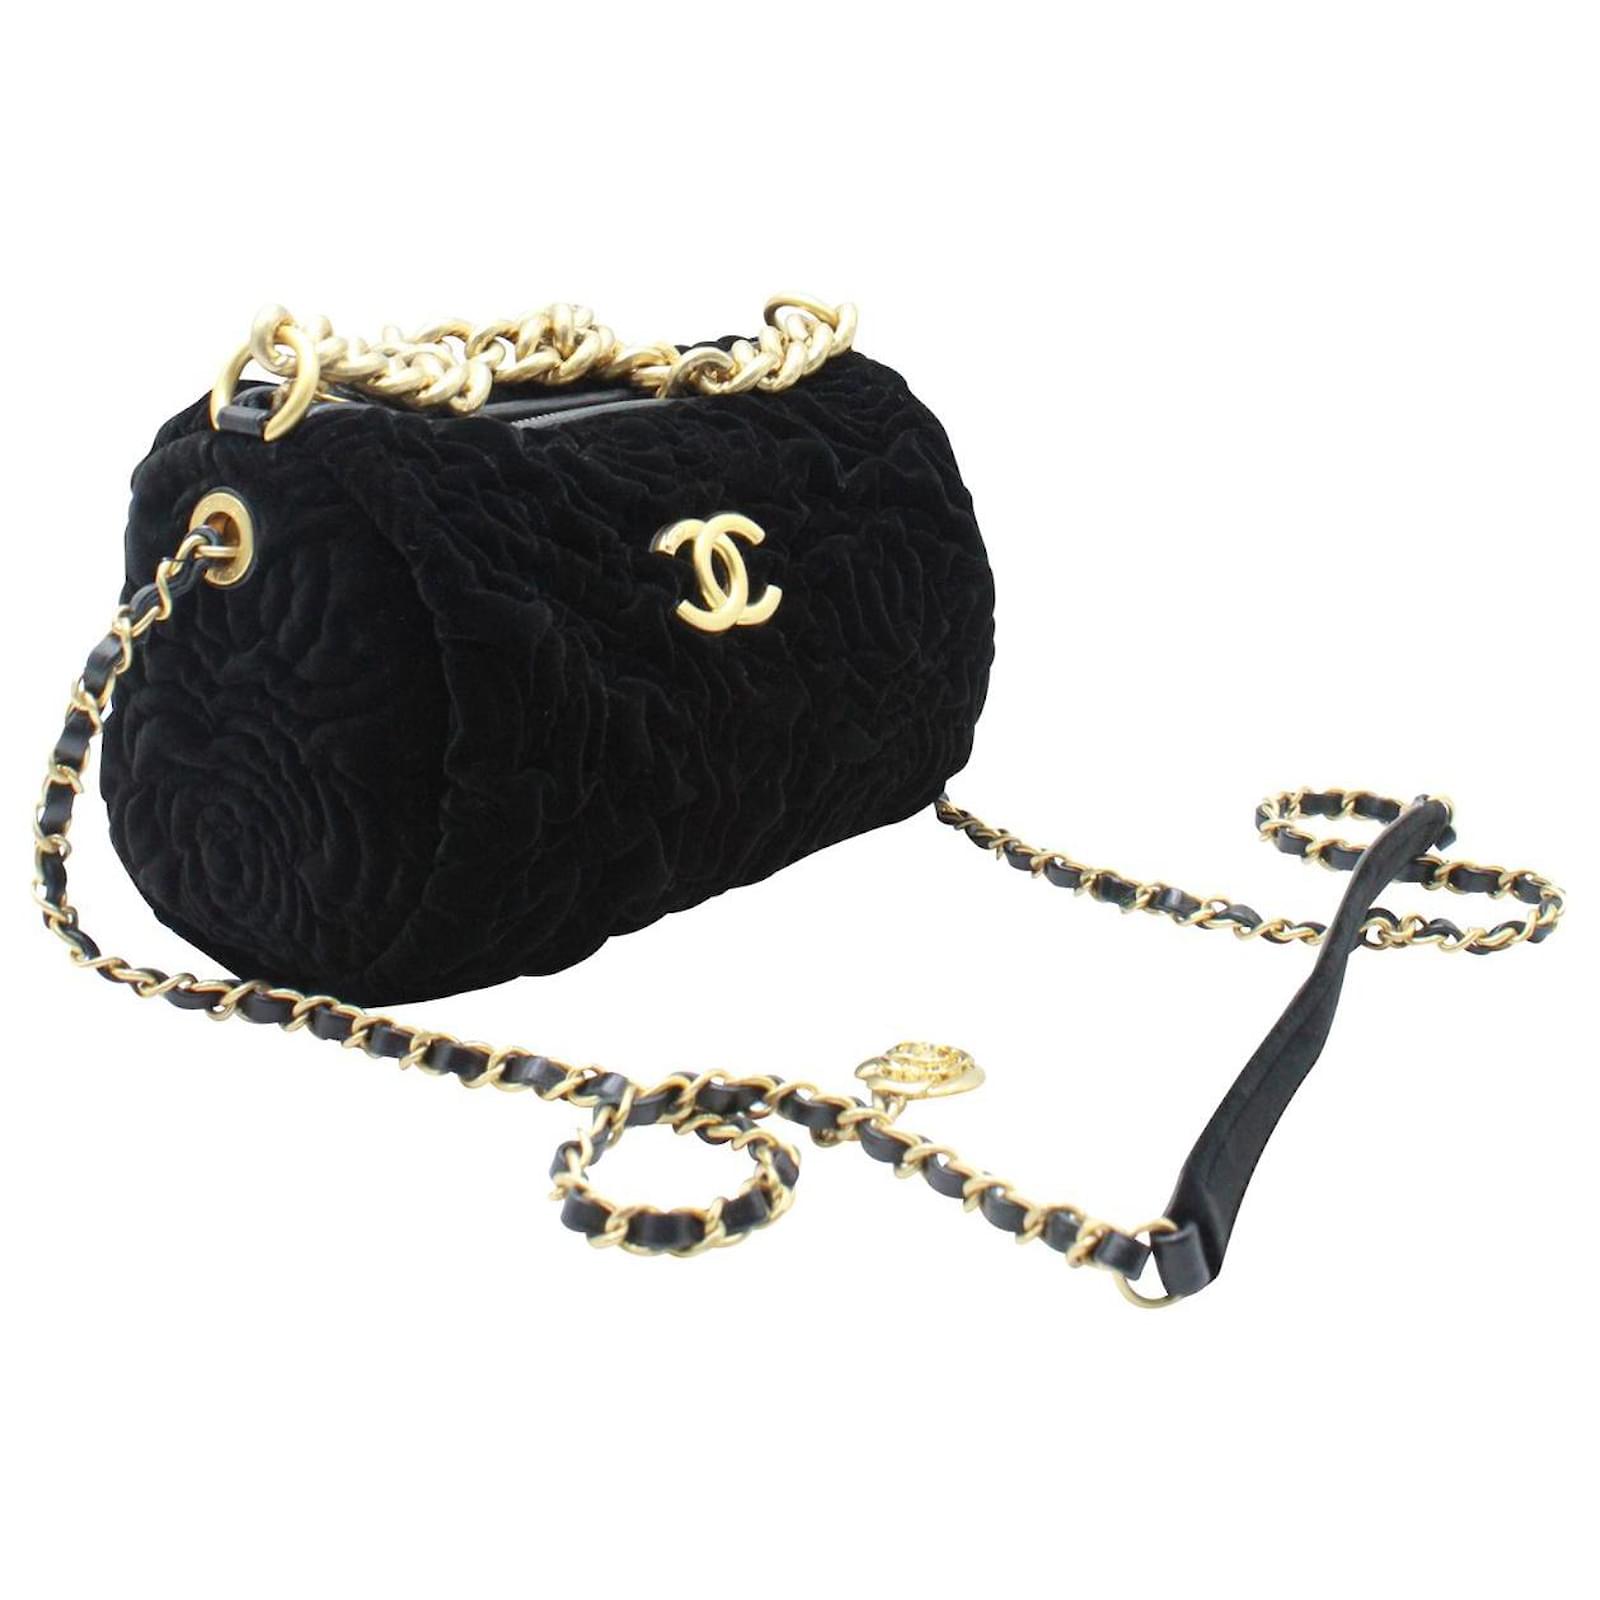 Handbags Chanel Chanel Two-Way Chain Camellia Shoulder Bag in Black Velvet